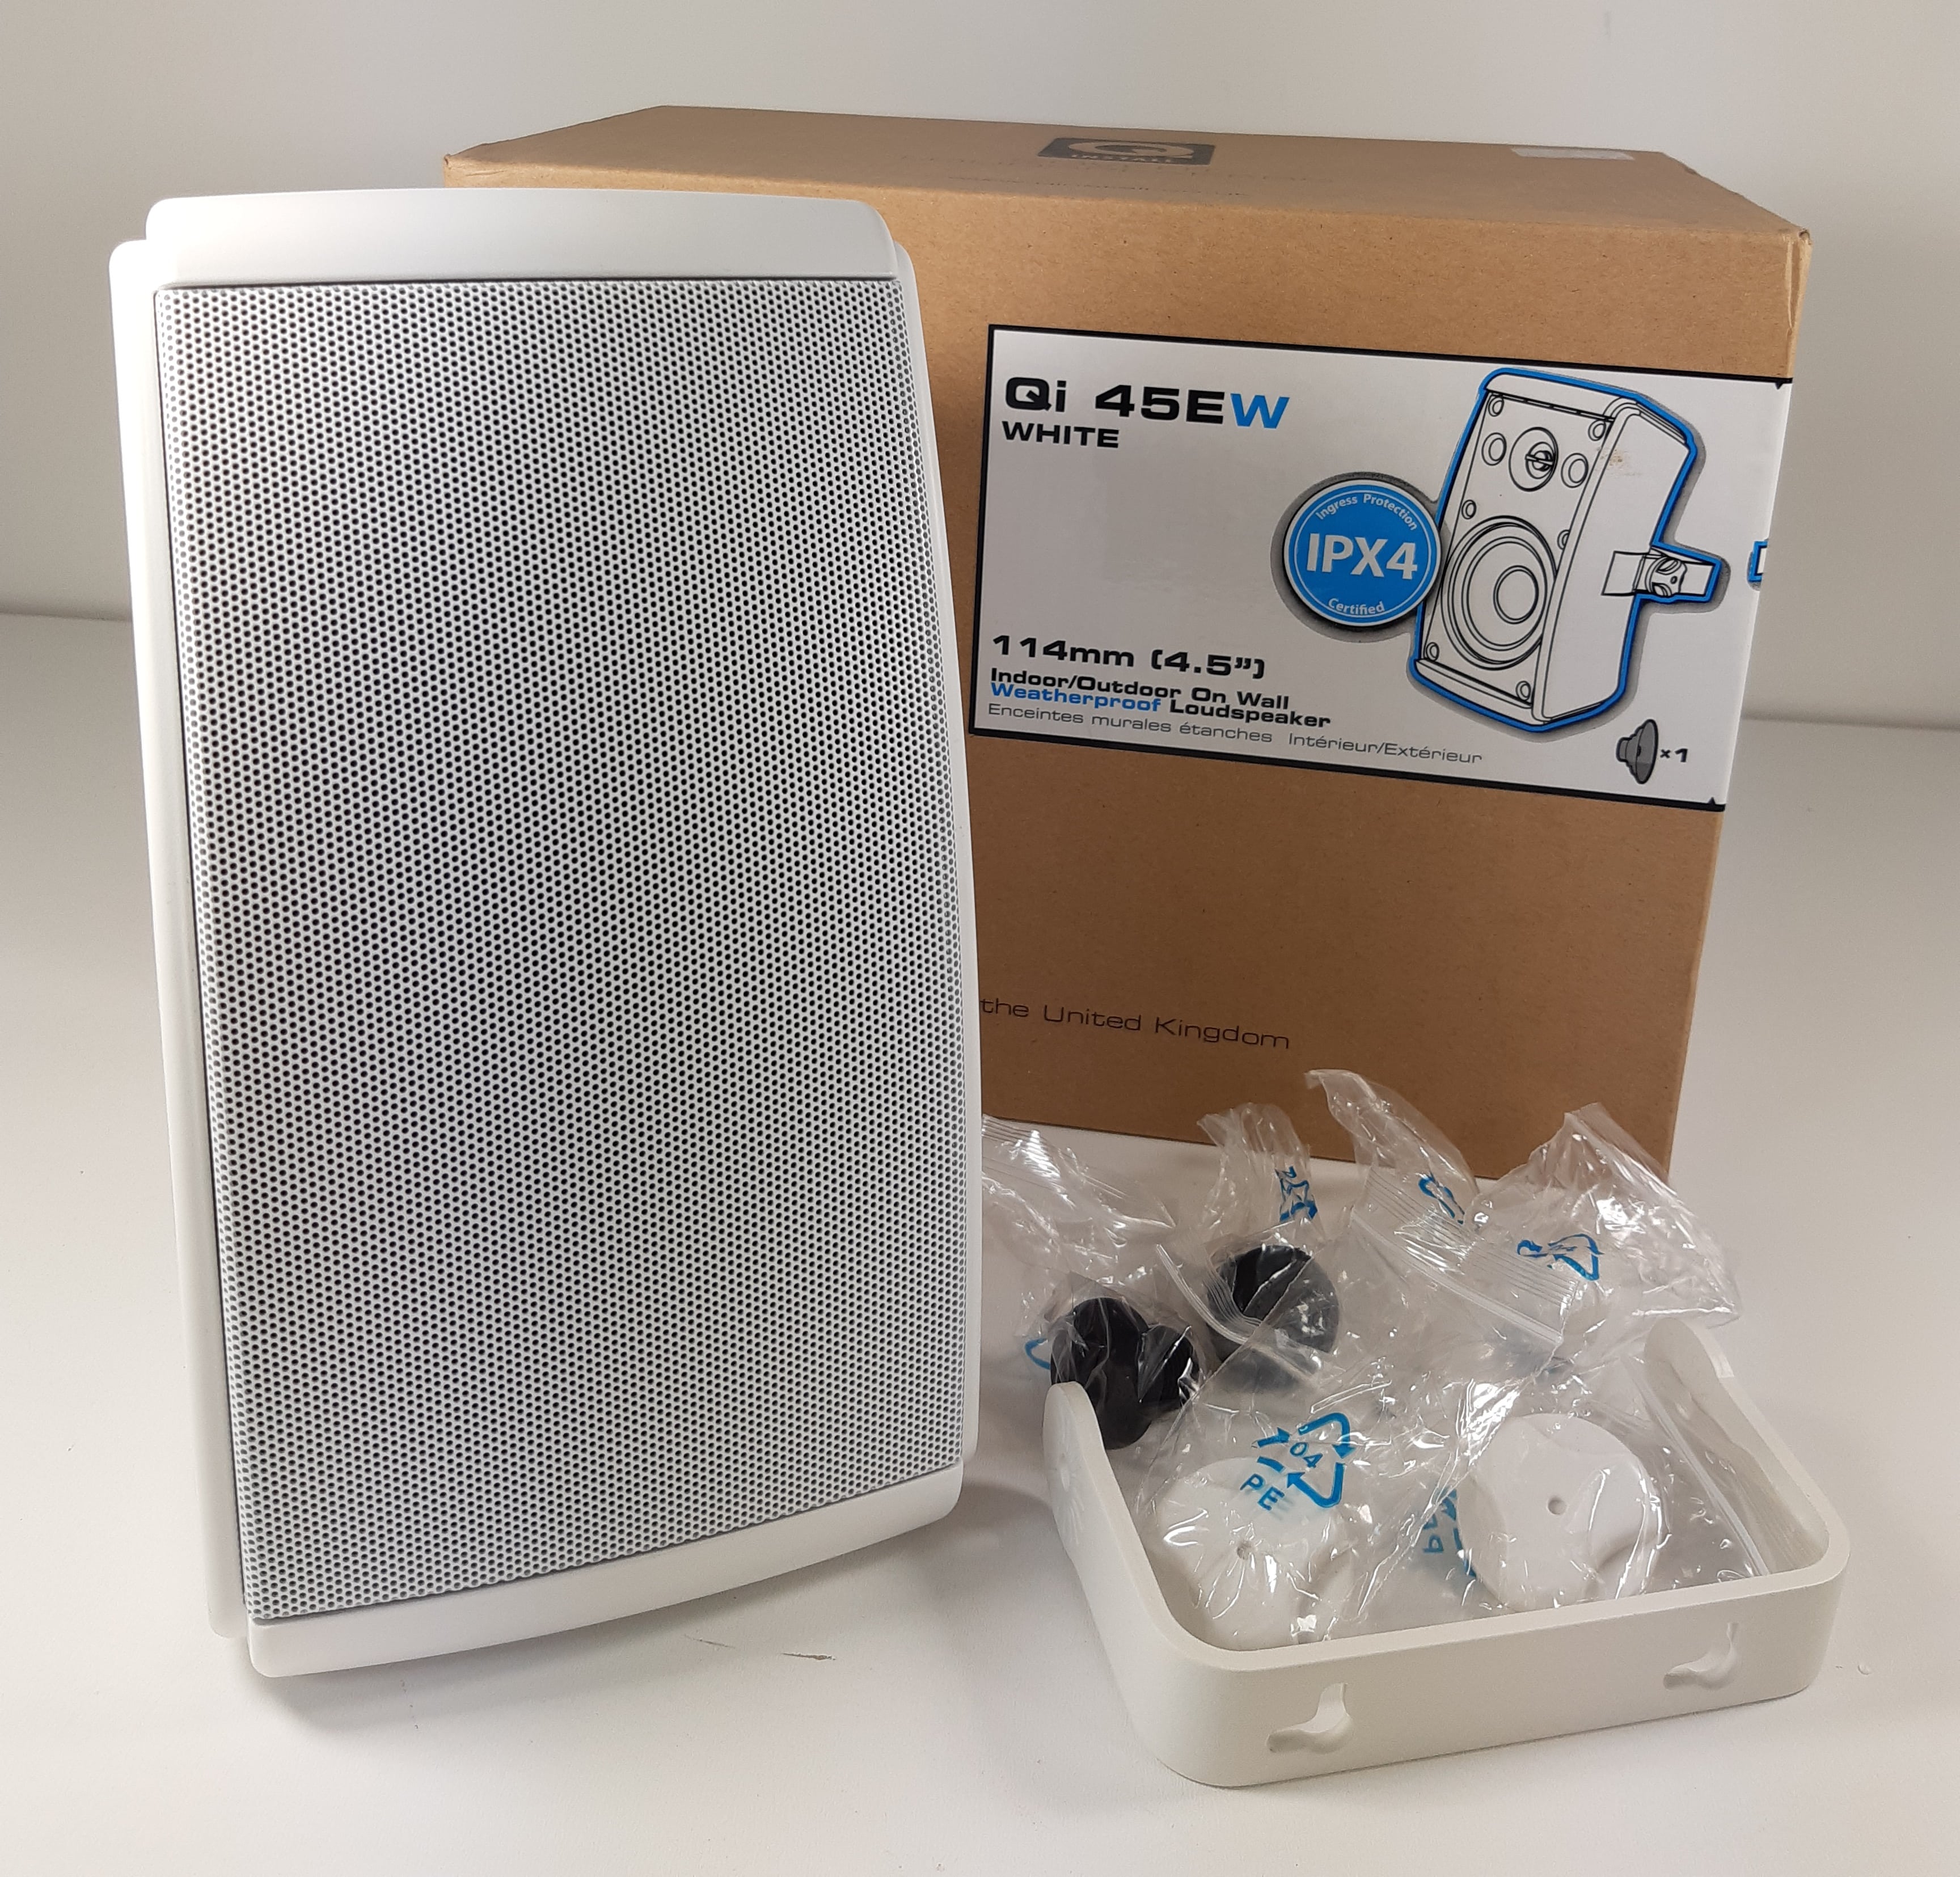 Q Acoustics QI 45EW box